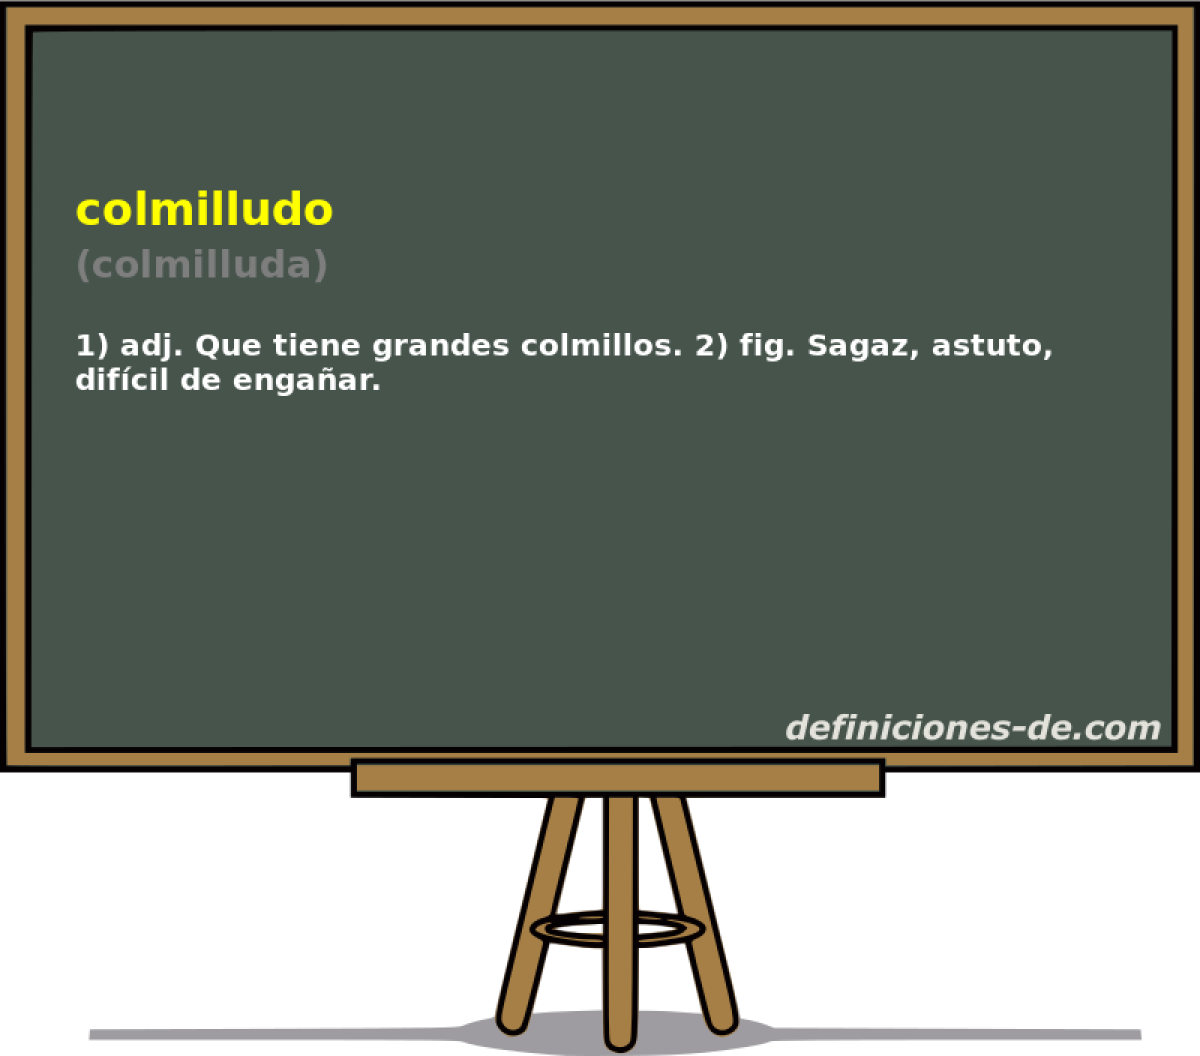 colmilludo (colmilluda)